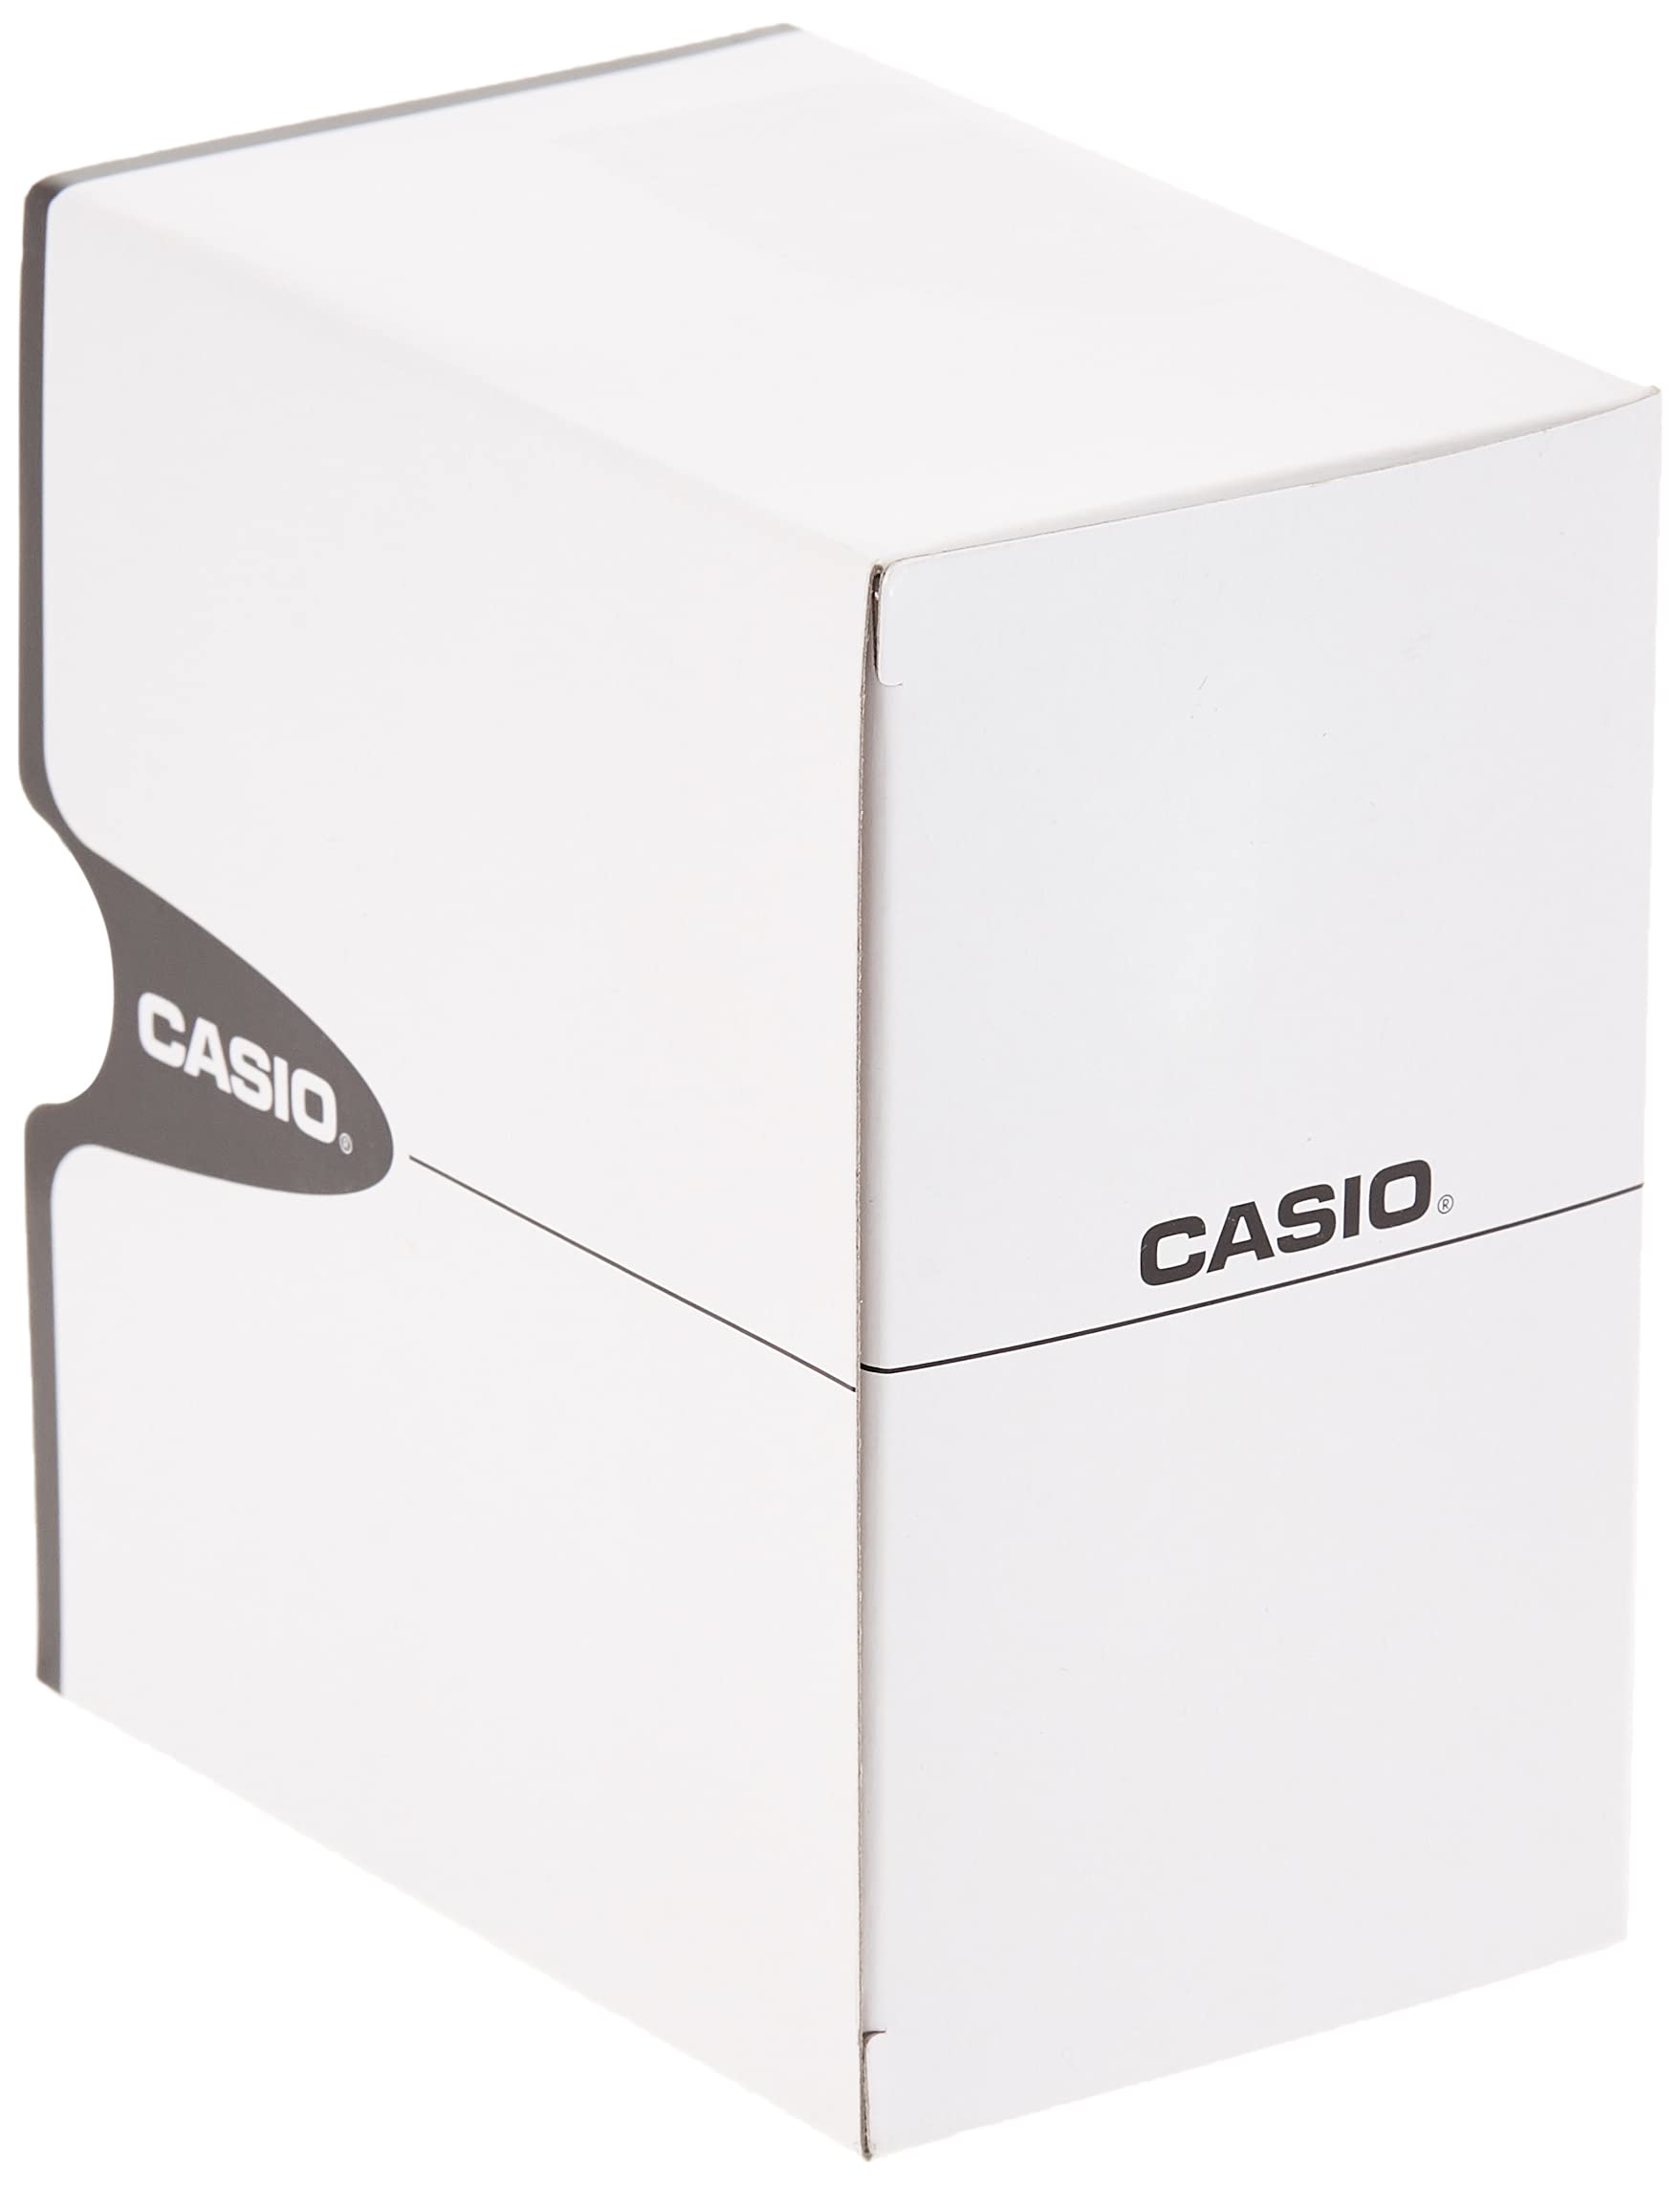 Casio Women's LA20WH-1ACF Classic Digital Black Resin Watch